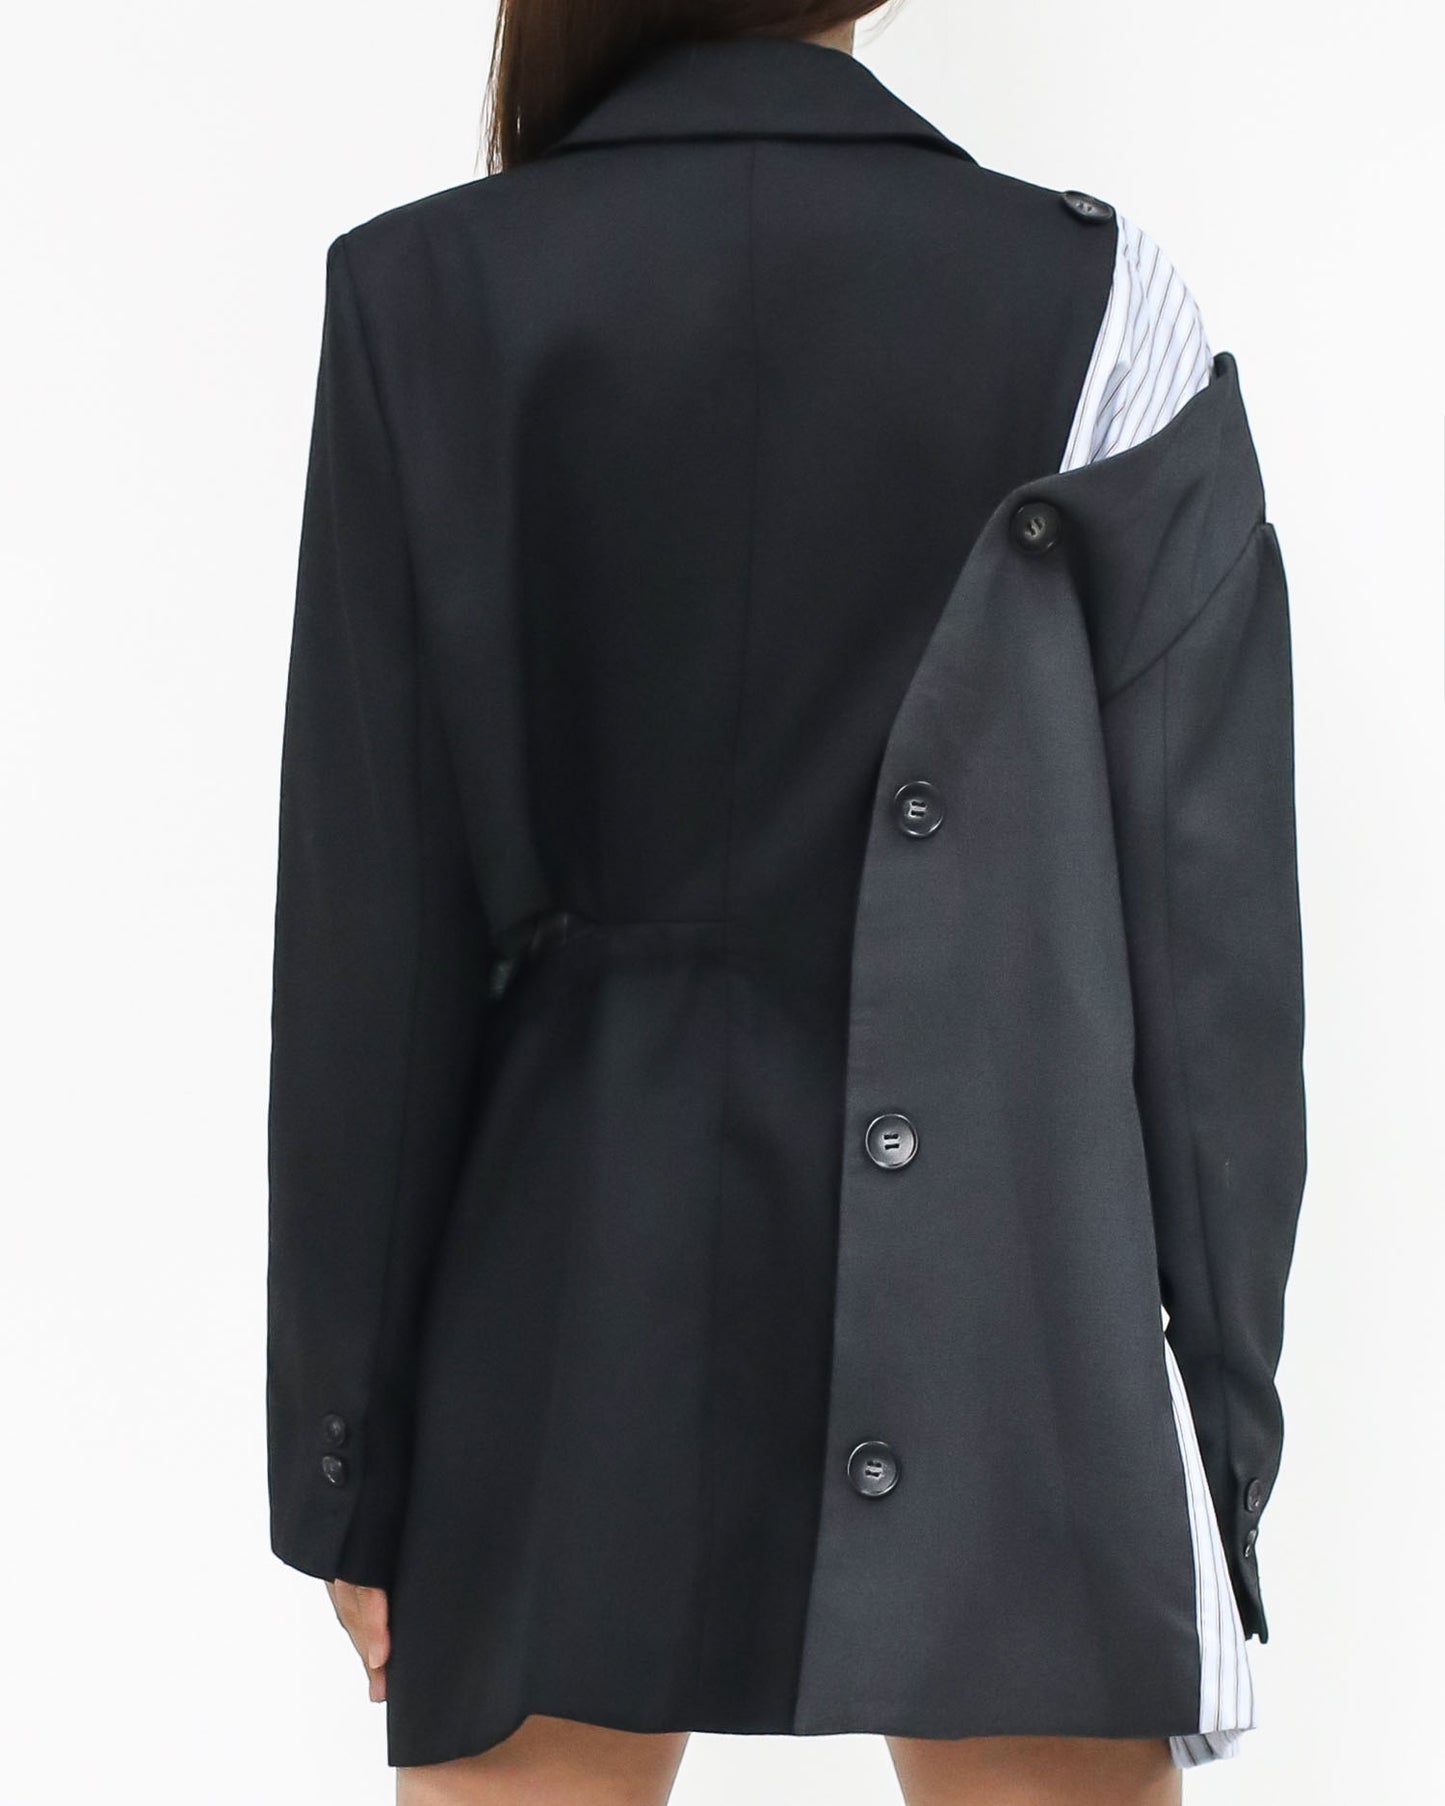 black & grey w/ blue stripes shirt contrast blazer *pre-order*